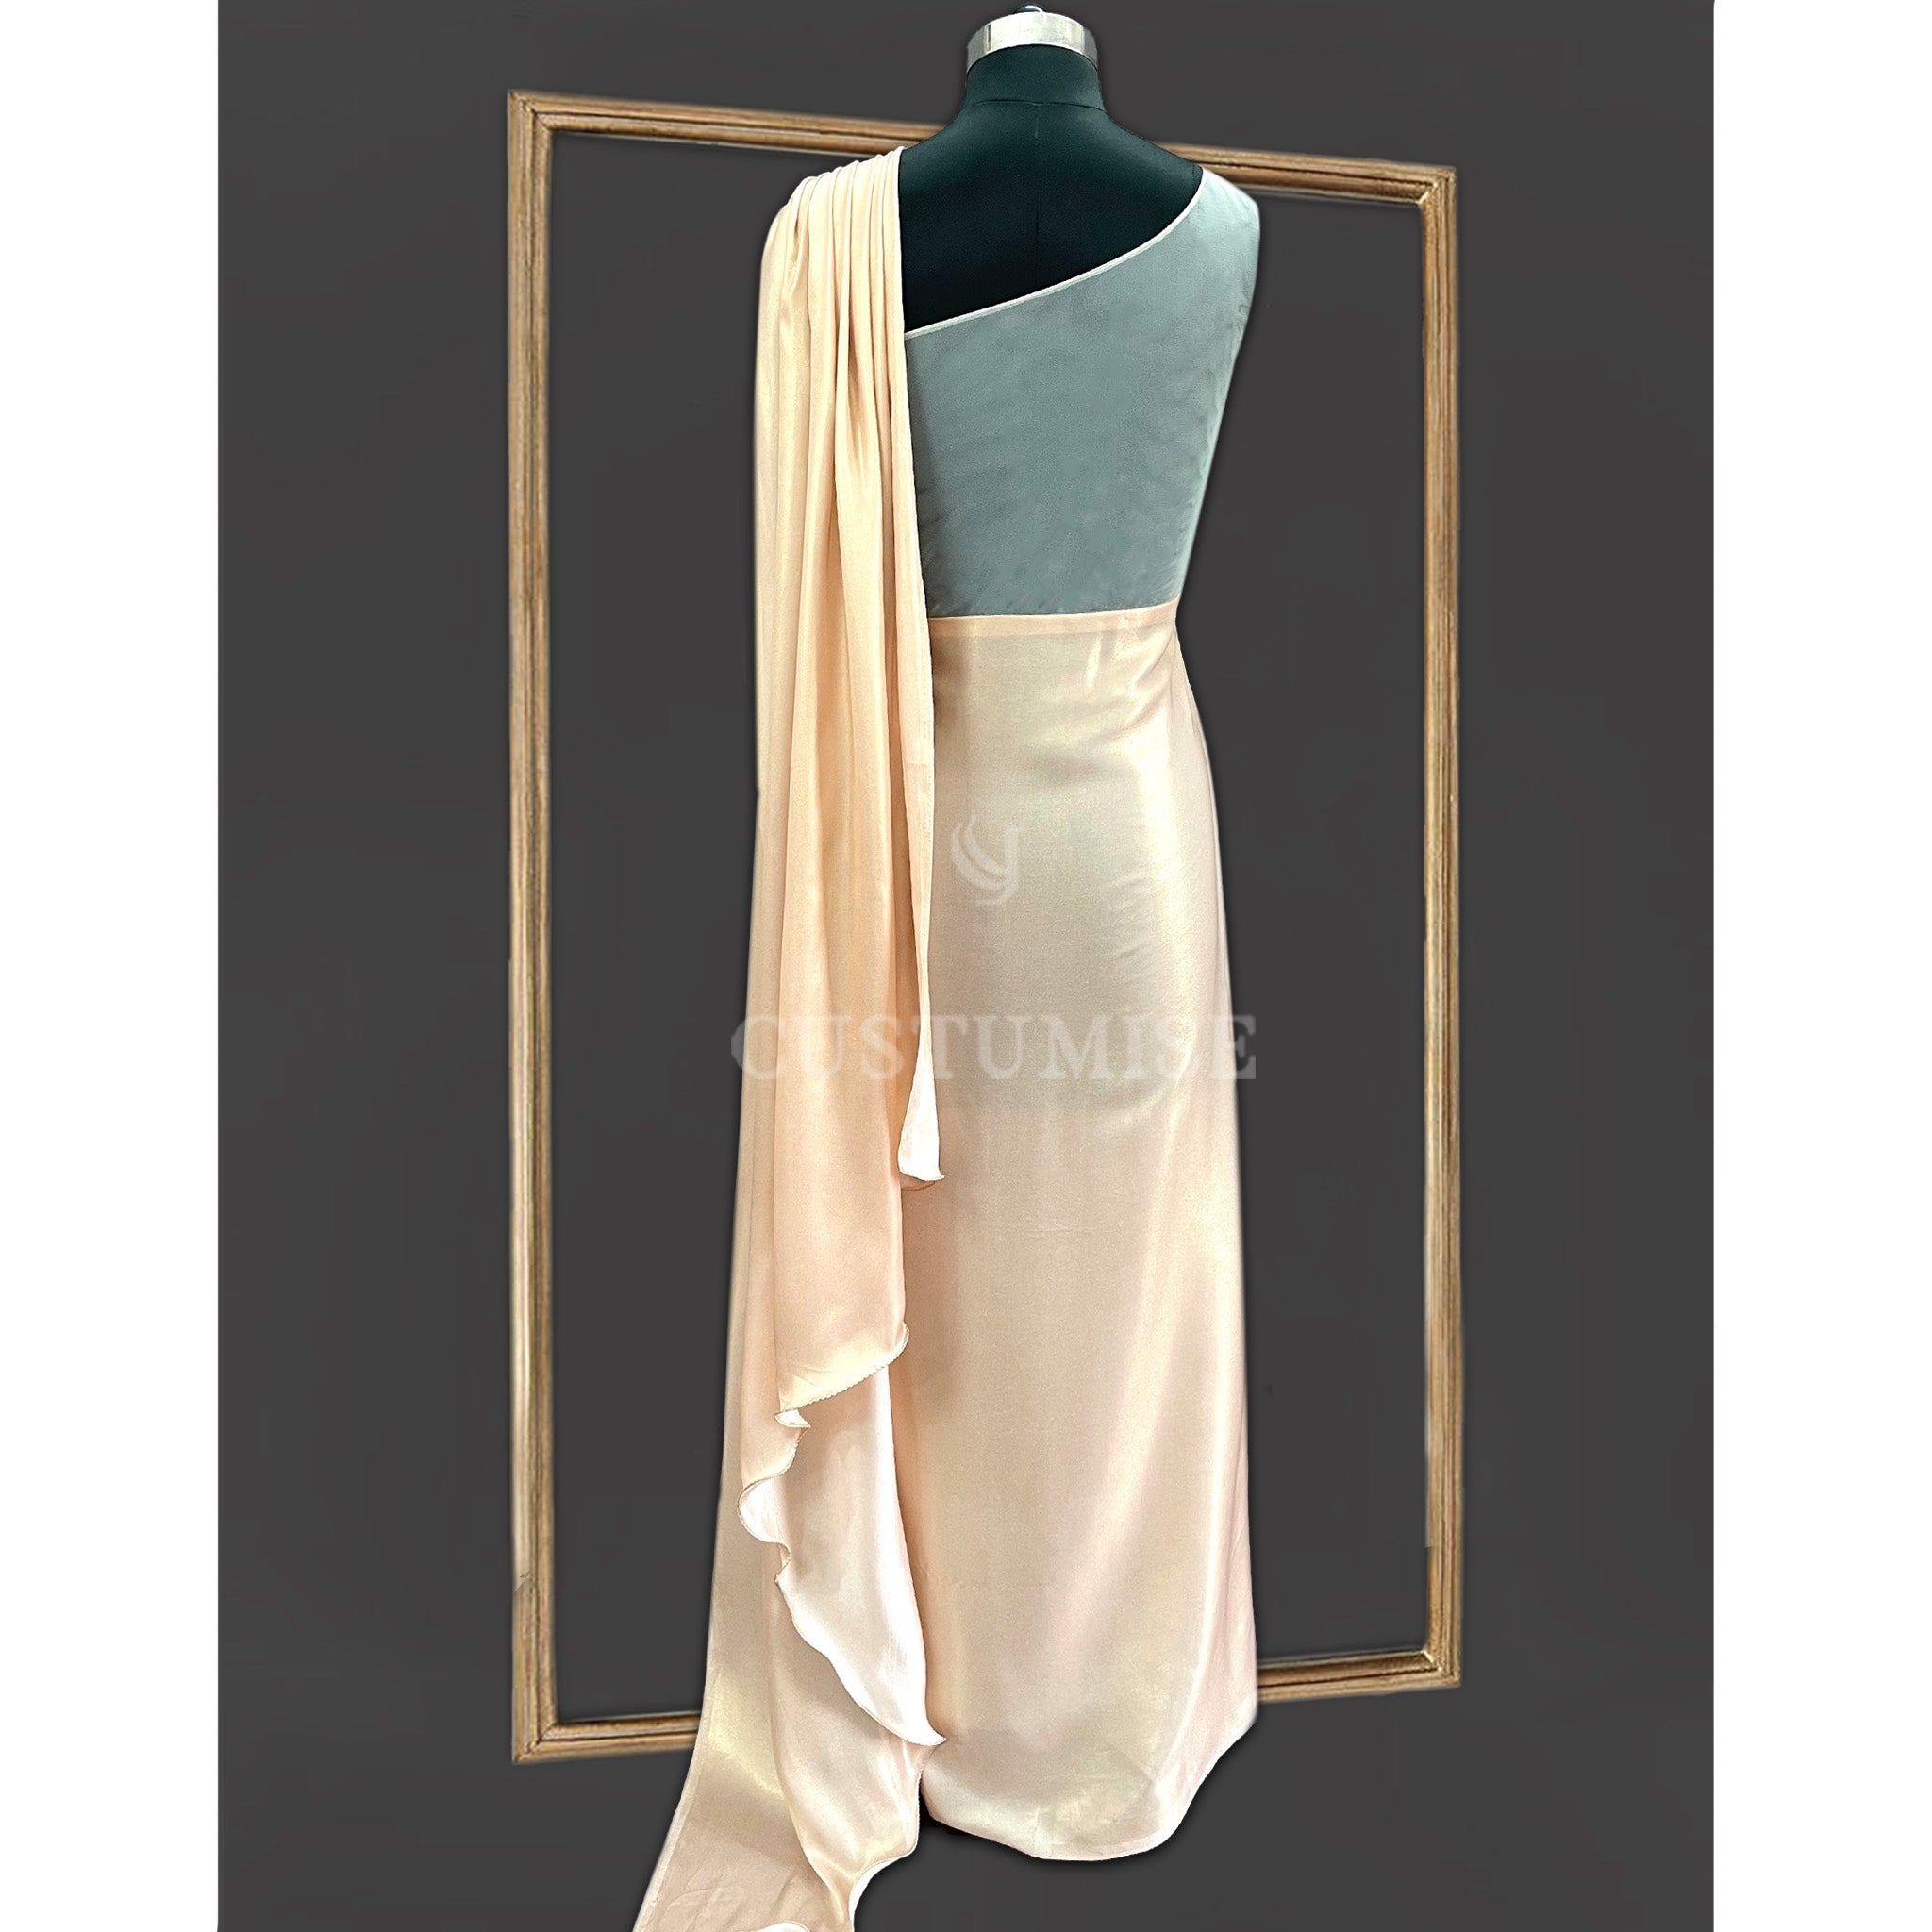 Stylish Draped Splendor-Rose gold Saree gown - Indian Designer Bridal Wedding Outfit